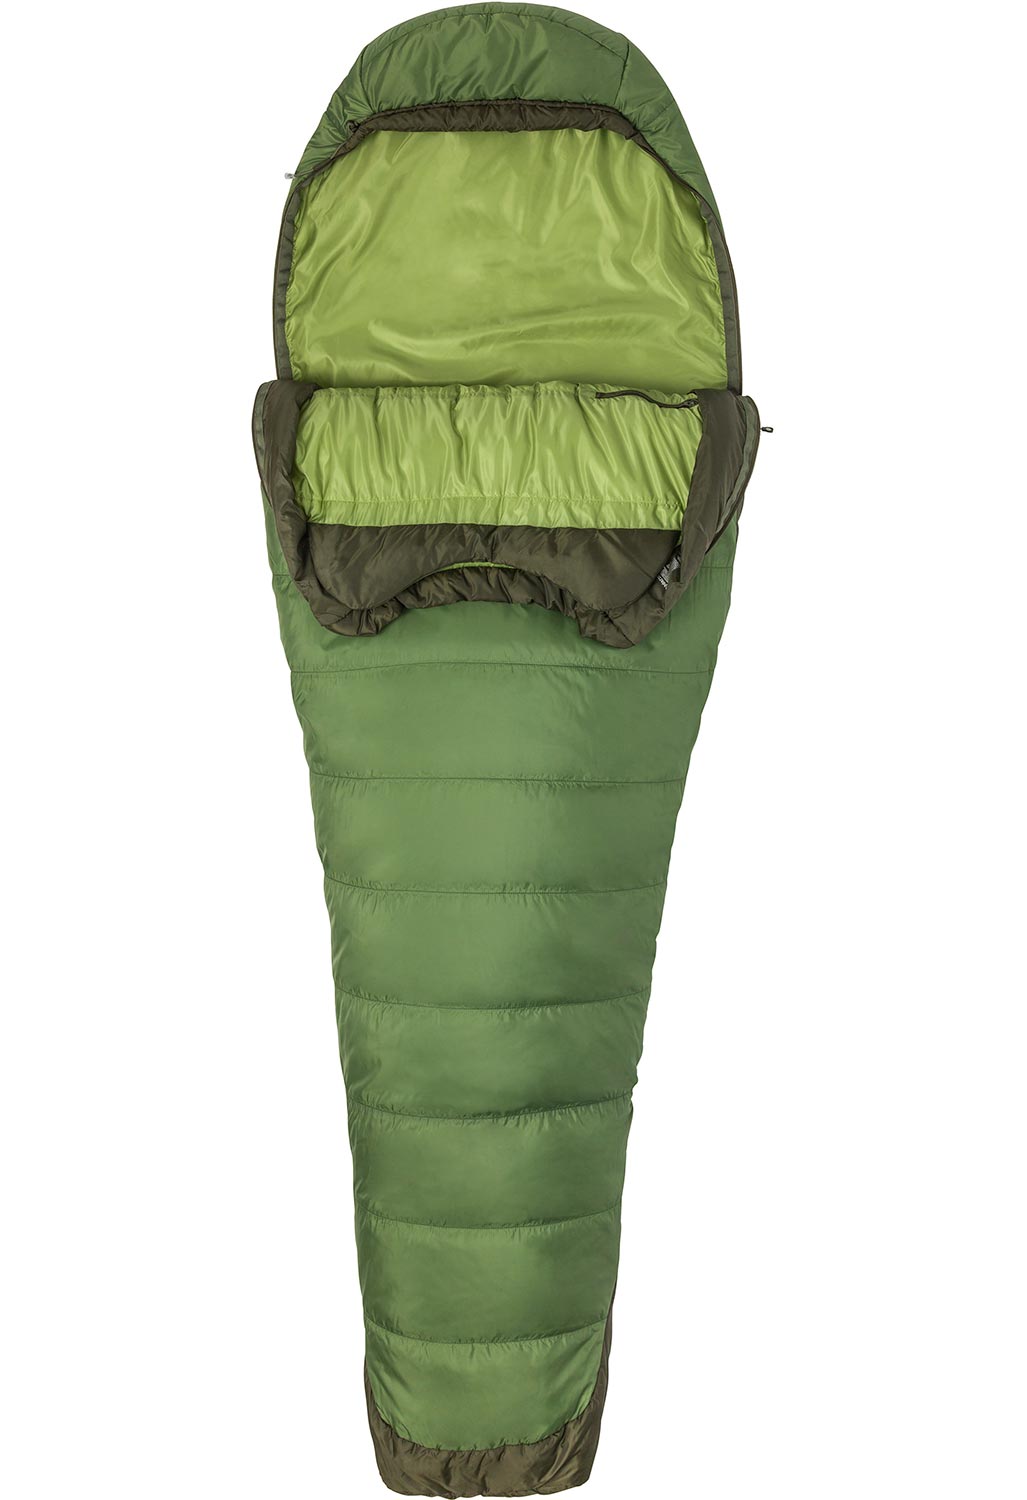 Marmot Trestles Elite Eco 30 Sleeping Bag - Vine Green/Forest Night